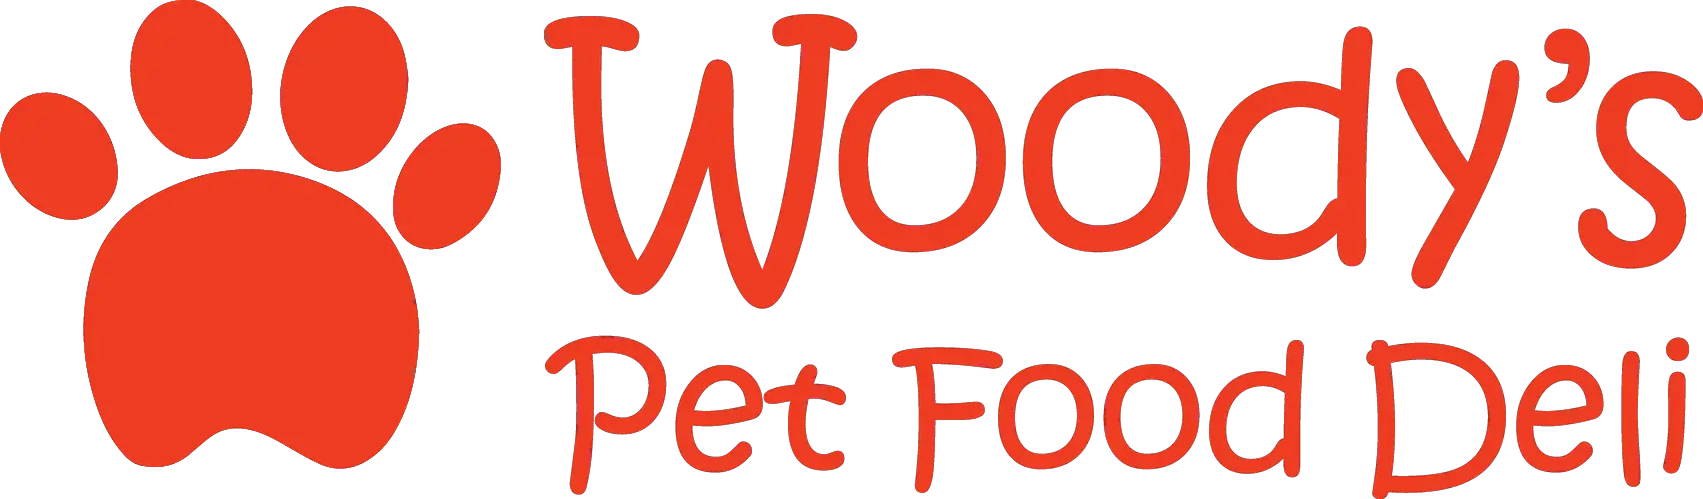 Company logo of Woody's Pet Food Deli